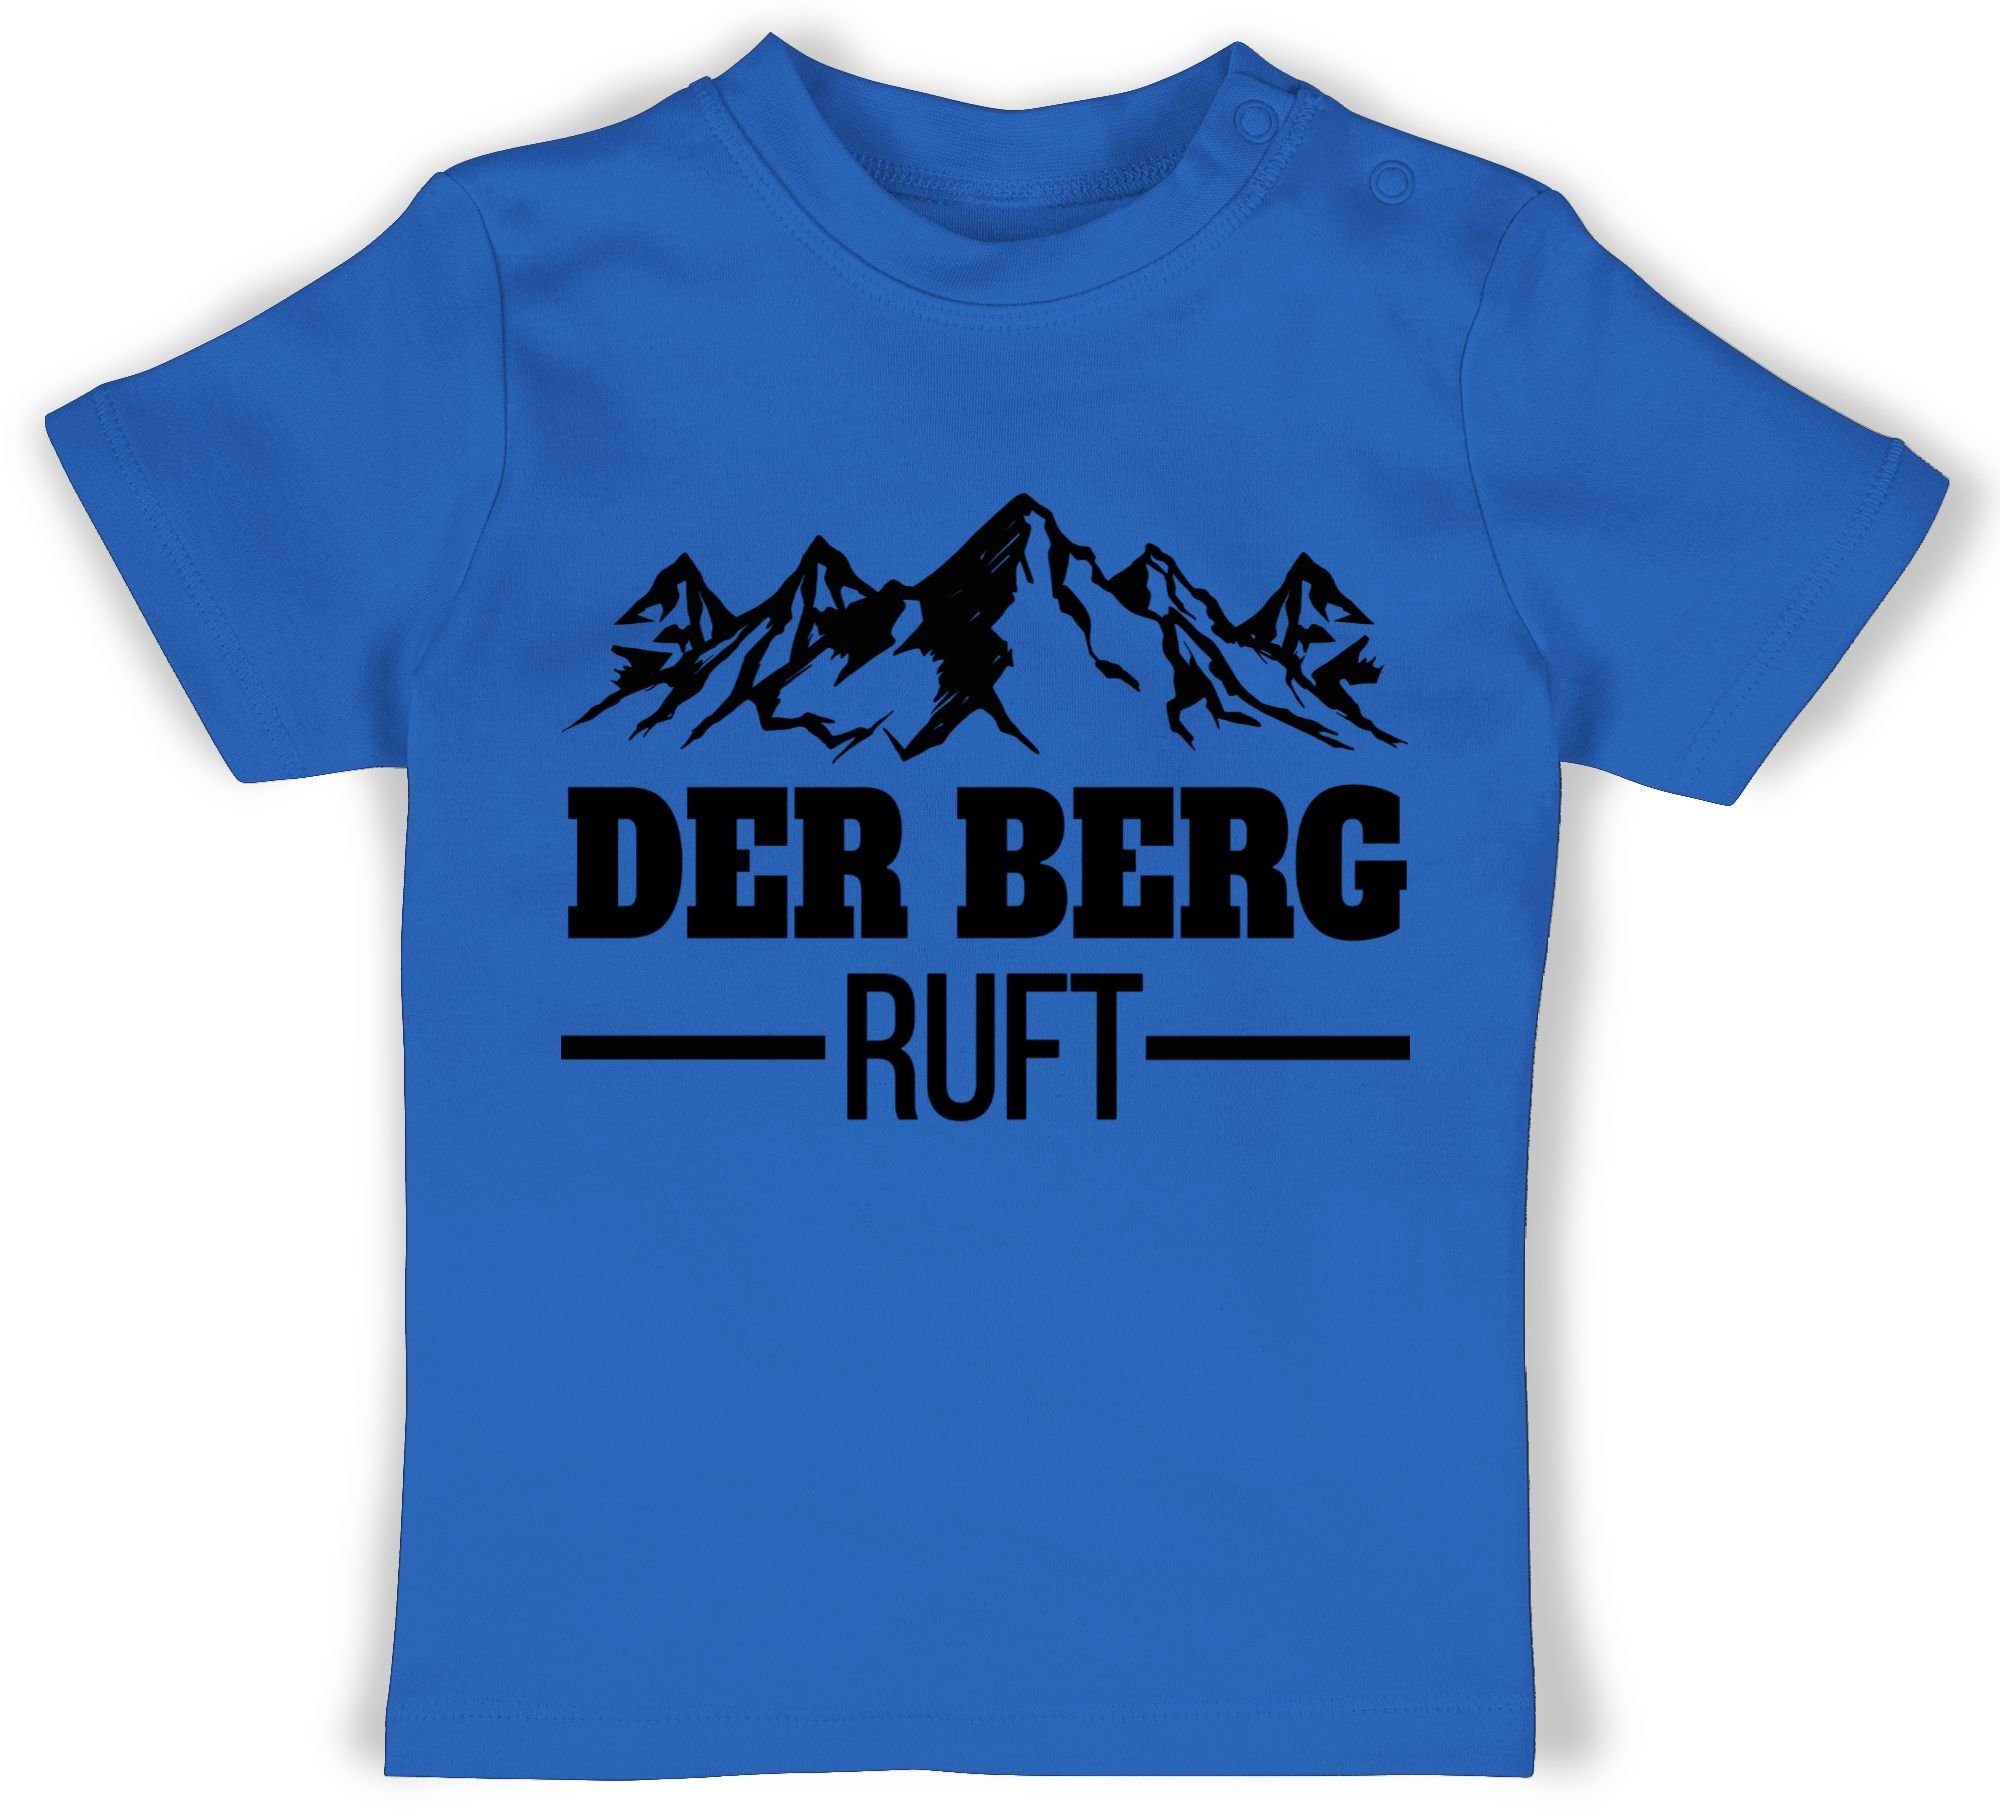 Royalblau - Baby schwarz & Berg T-Shirt 3 Shirtracer Der Sport ruft Bewegung